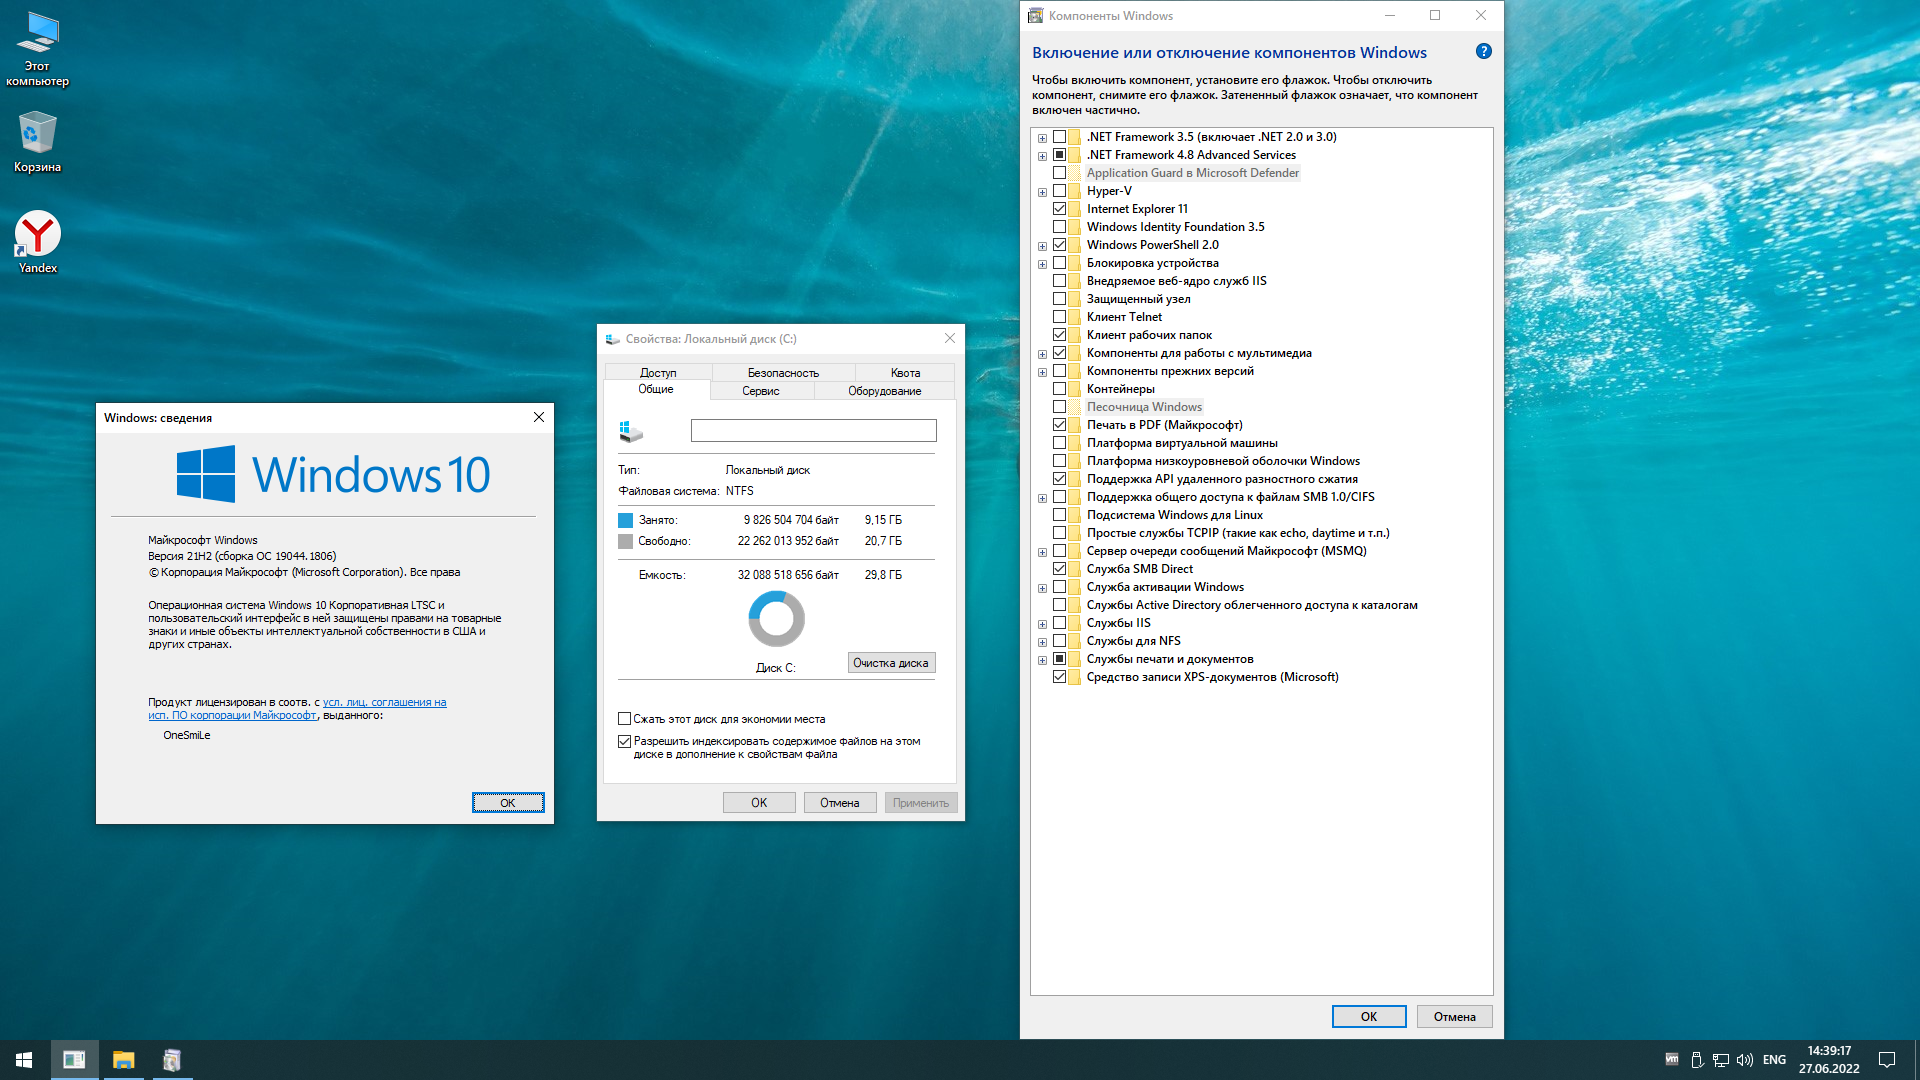 Windows 10 Enterprise LTSC x64 Rus by OneSmiLe [19044.1806]